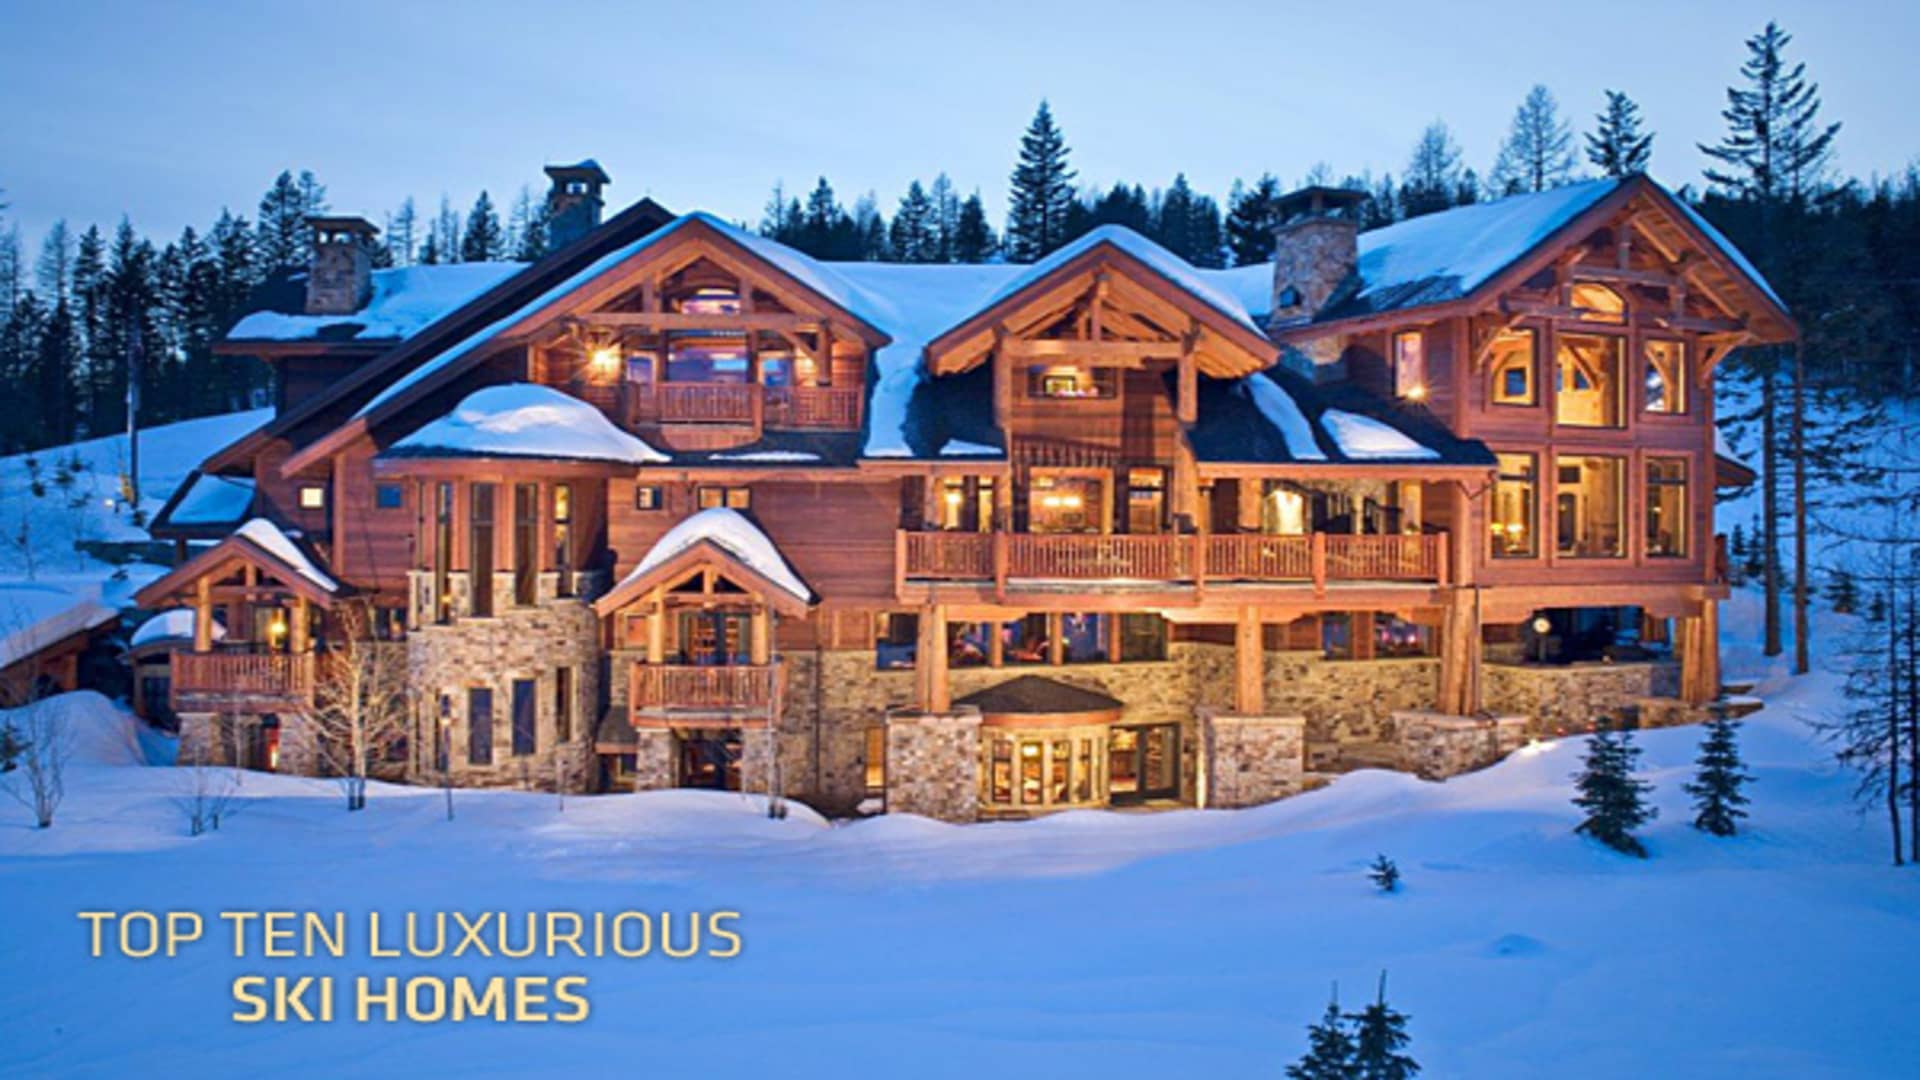 Top 10 Luxurious Ski Homes